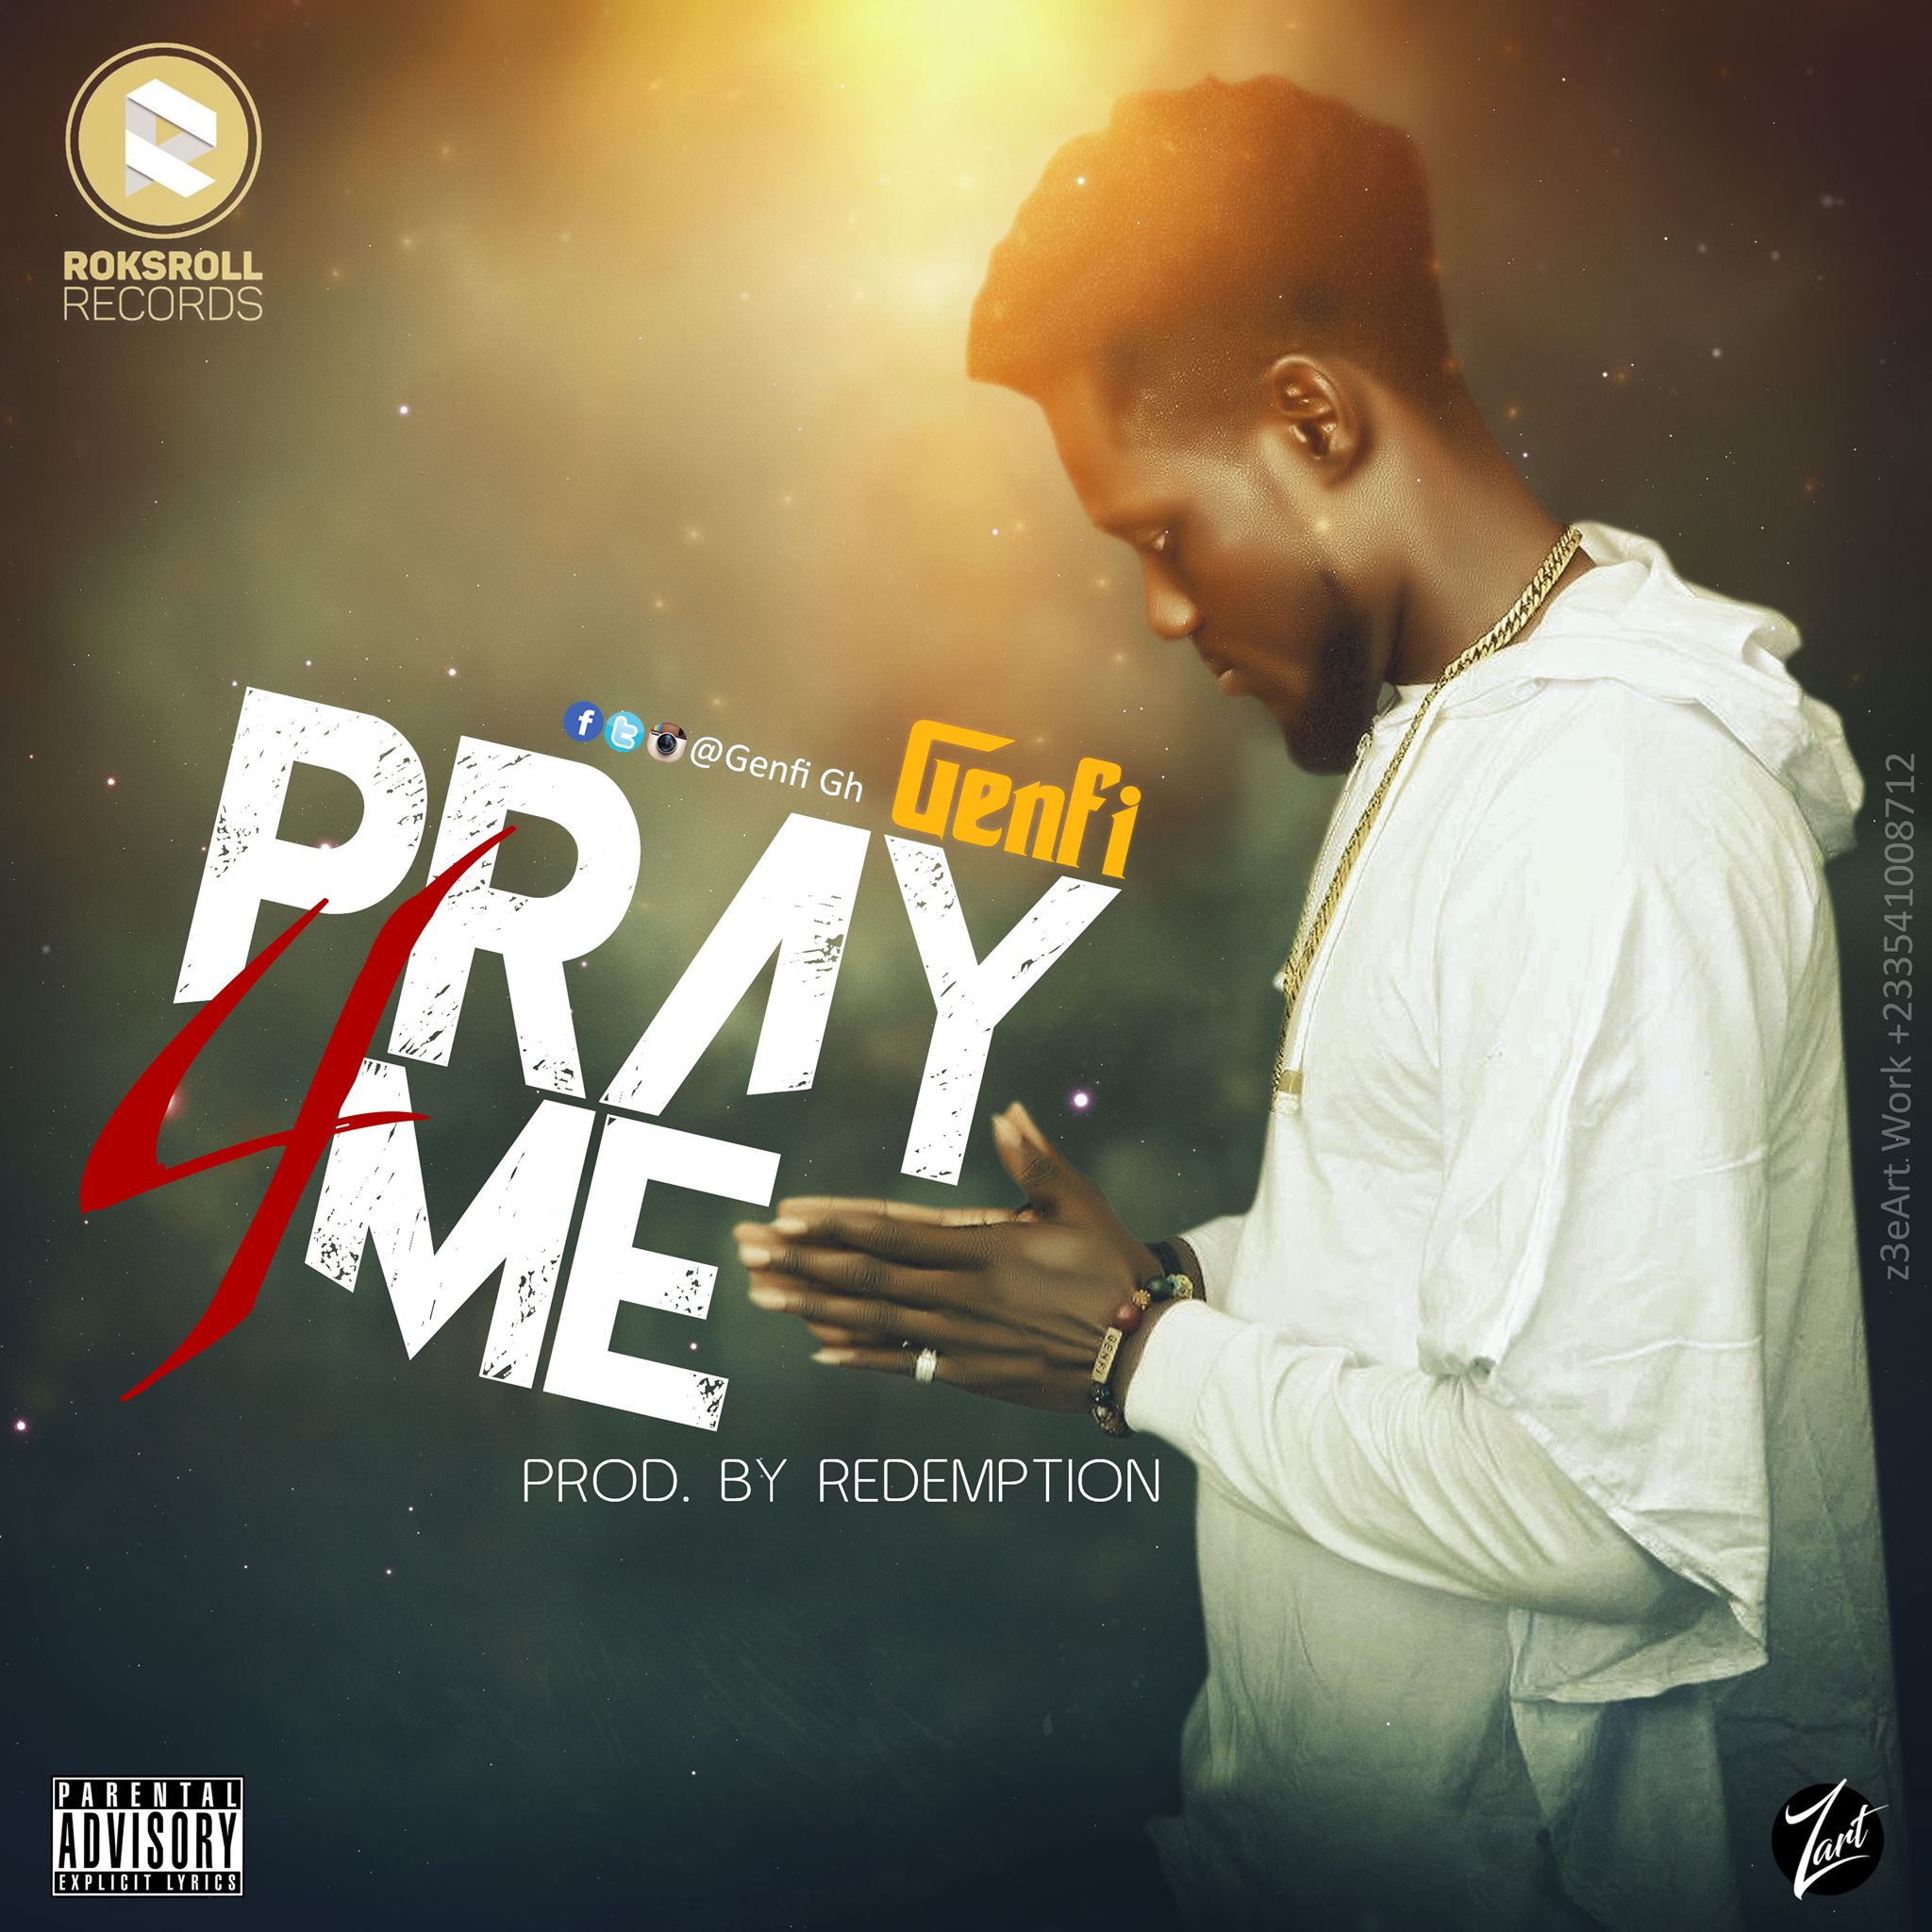 Genfi – Pray 4 Me (Prod. By Redemption)